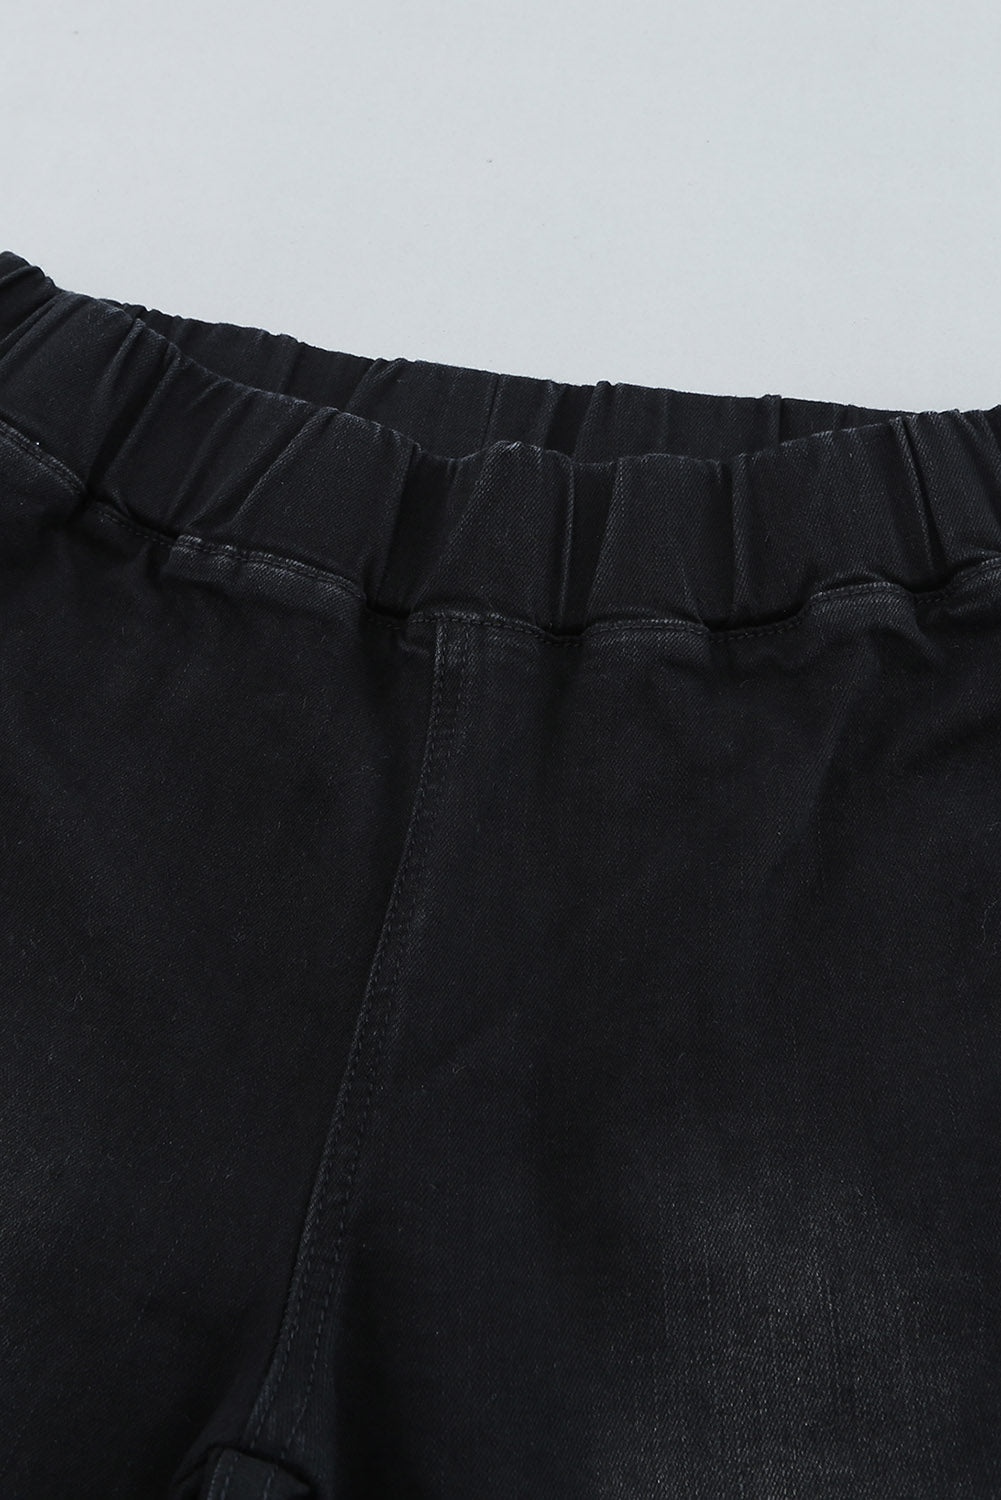 Black Distressed Bell Bottom Denim Pants